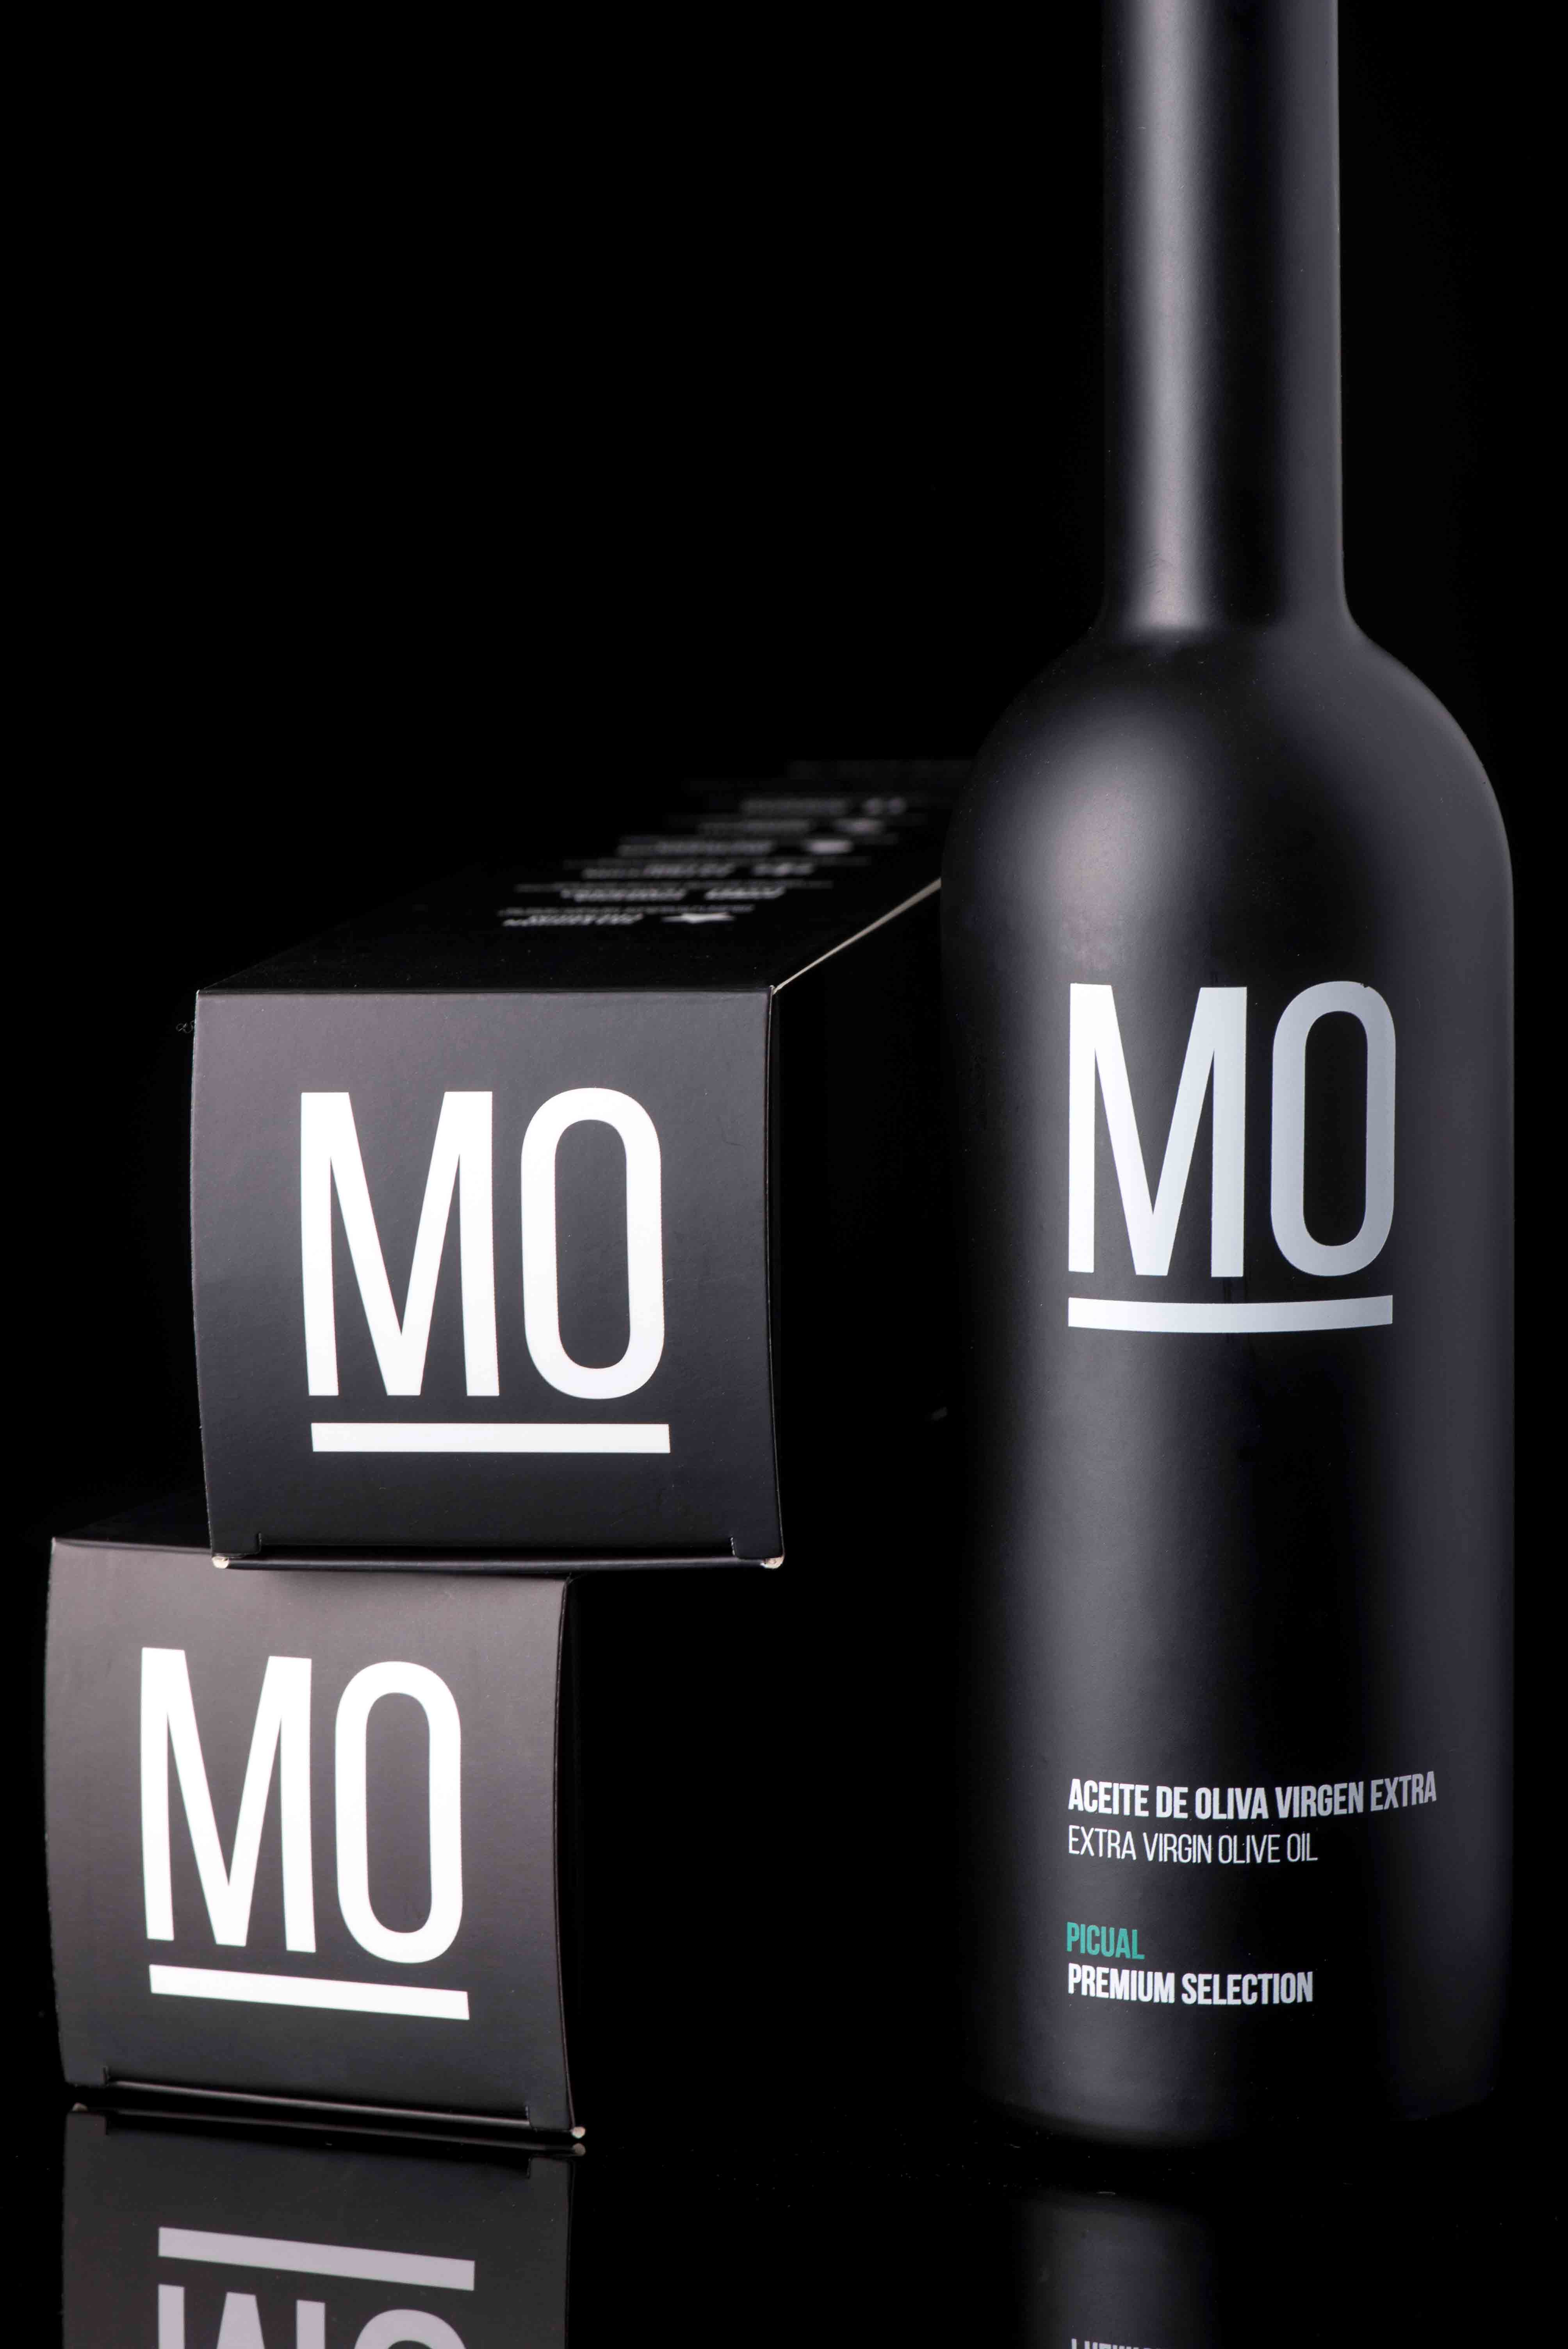 Compra MO Premium en Origen Oliva